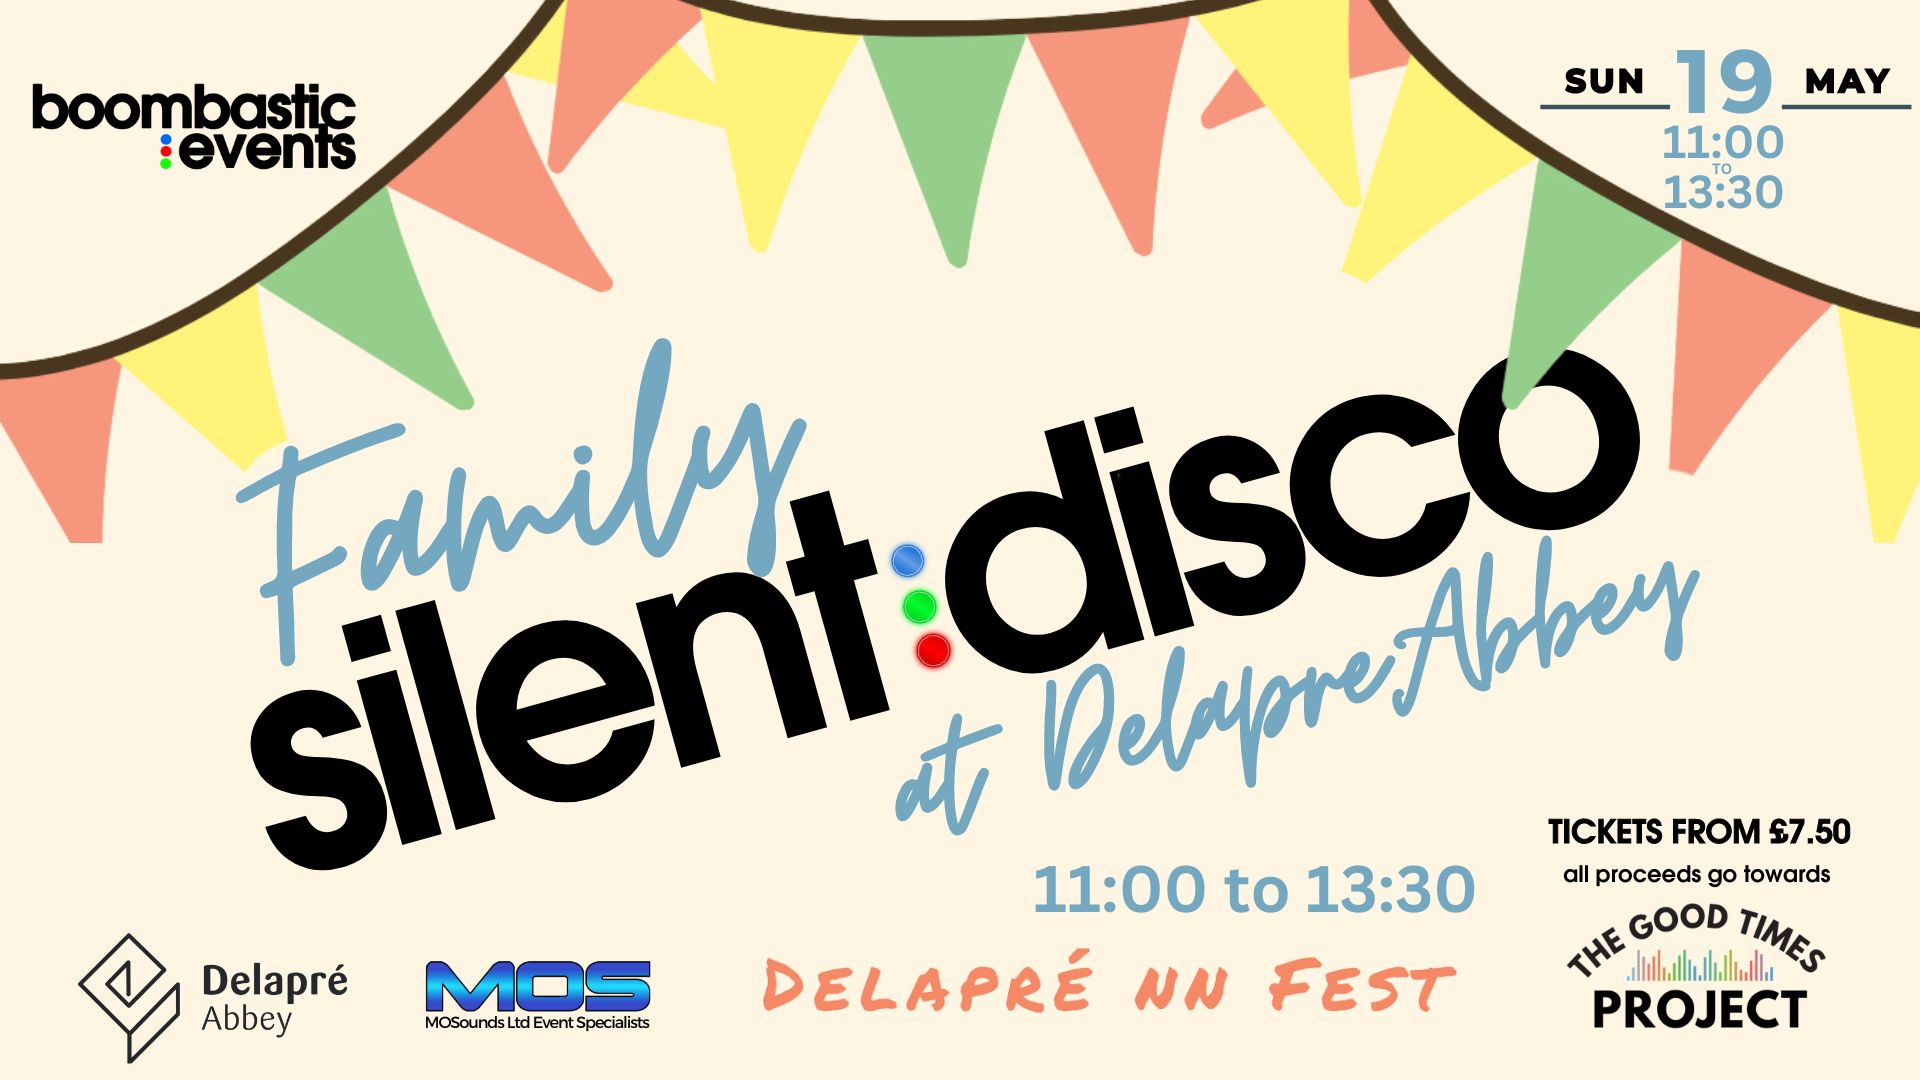 Family Silent Disco at Delapre Abbey - 11:00 Session